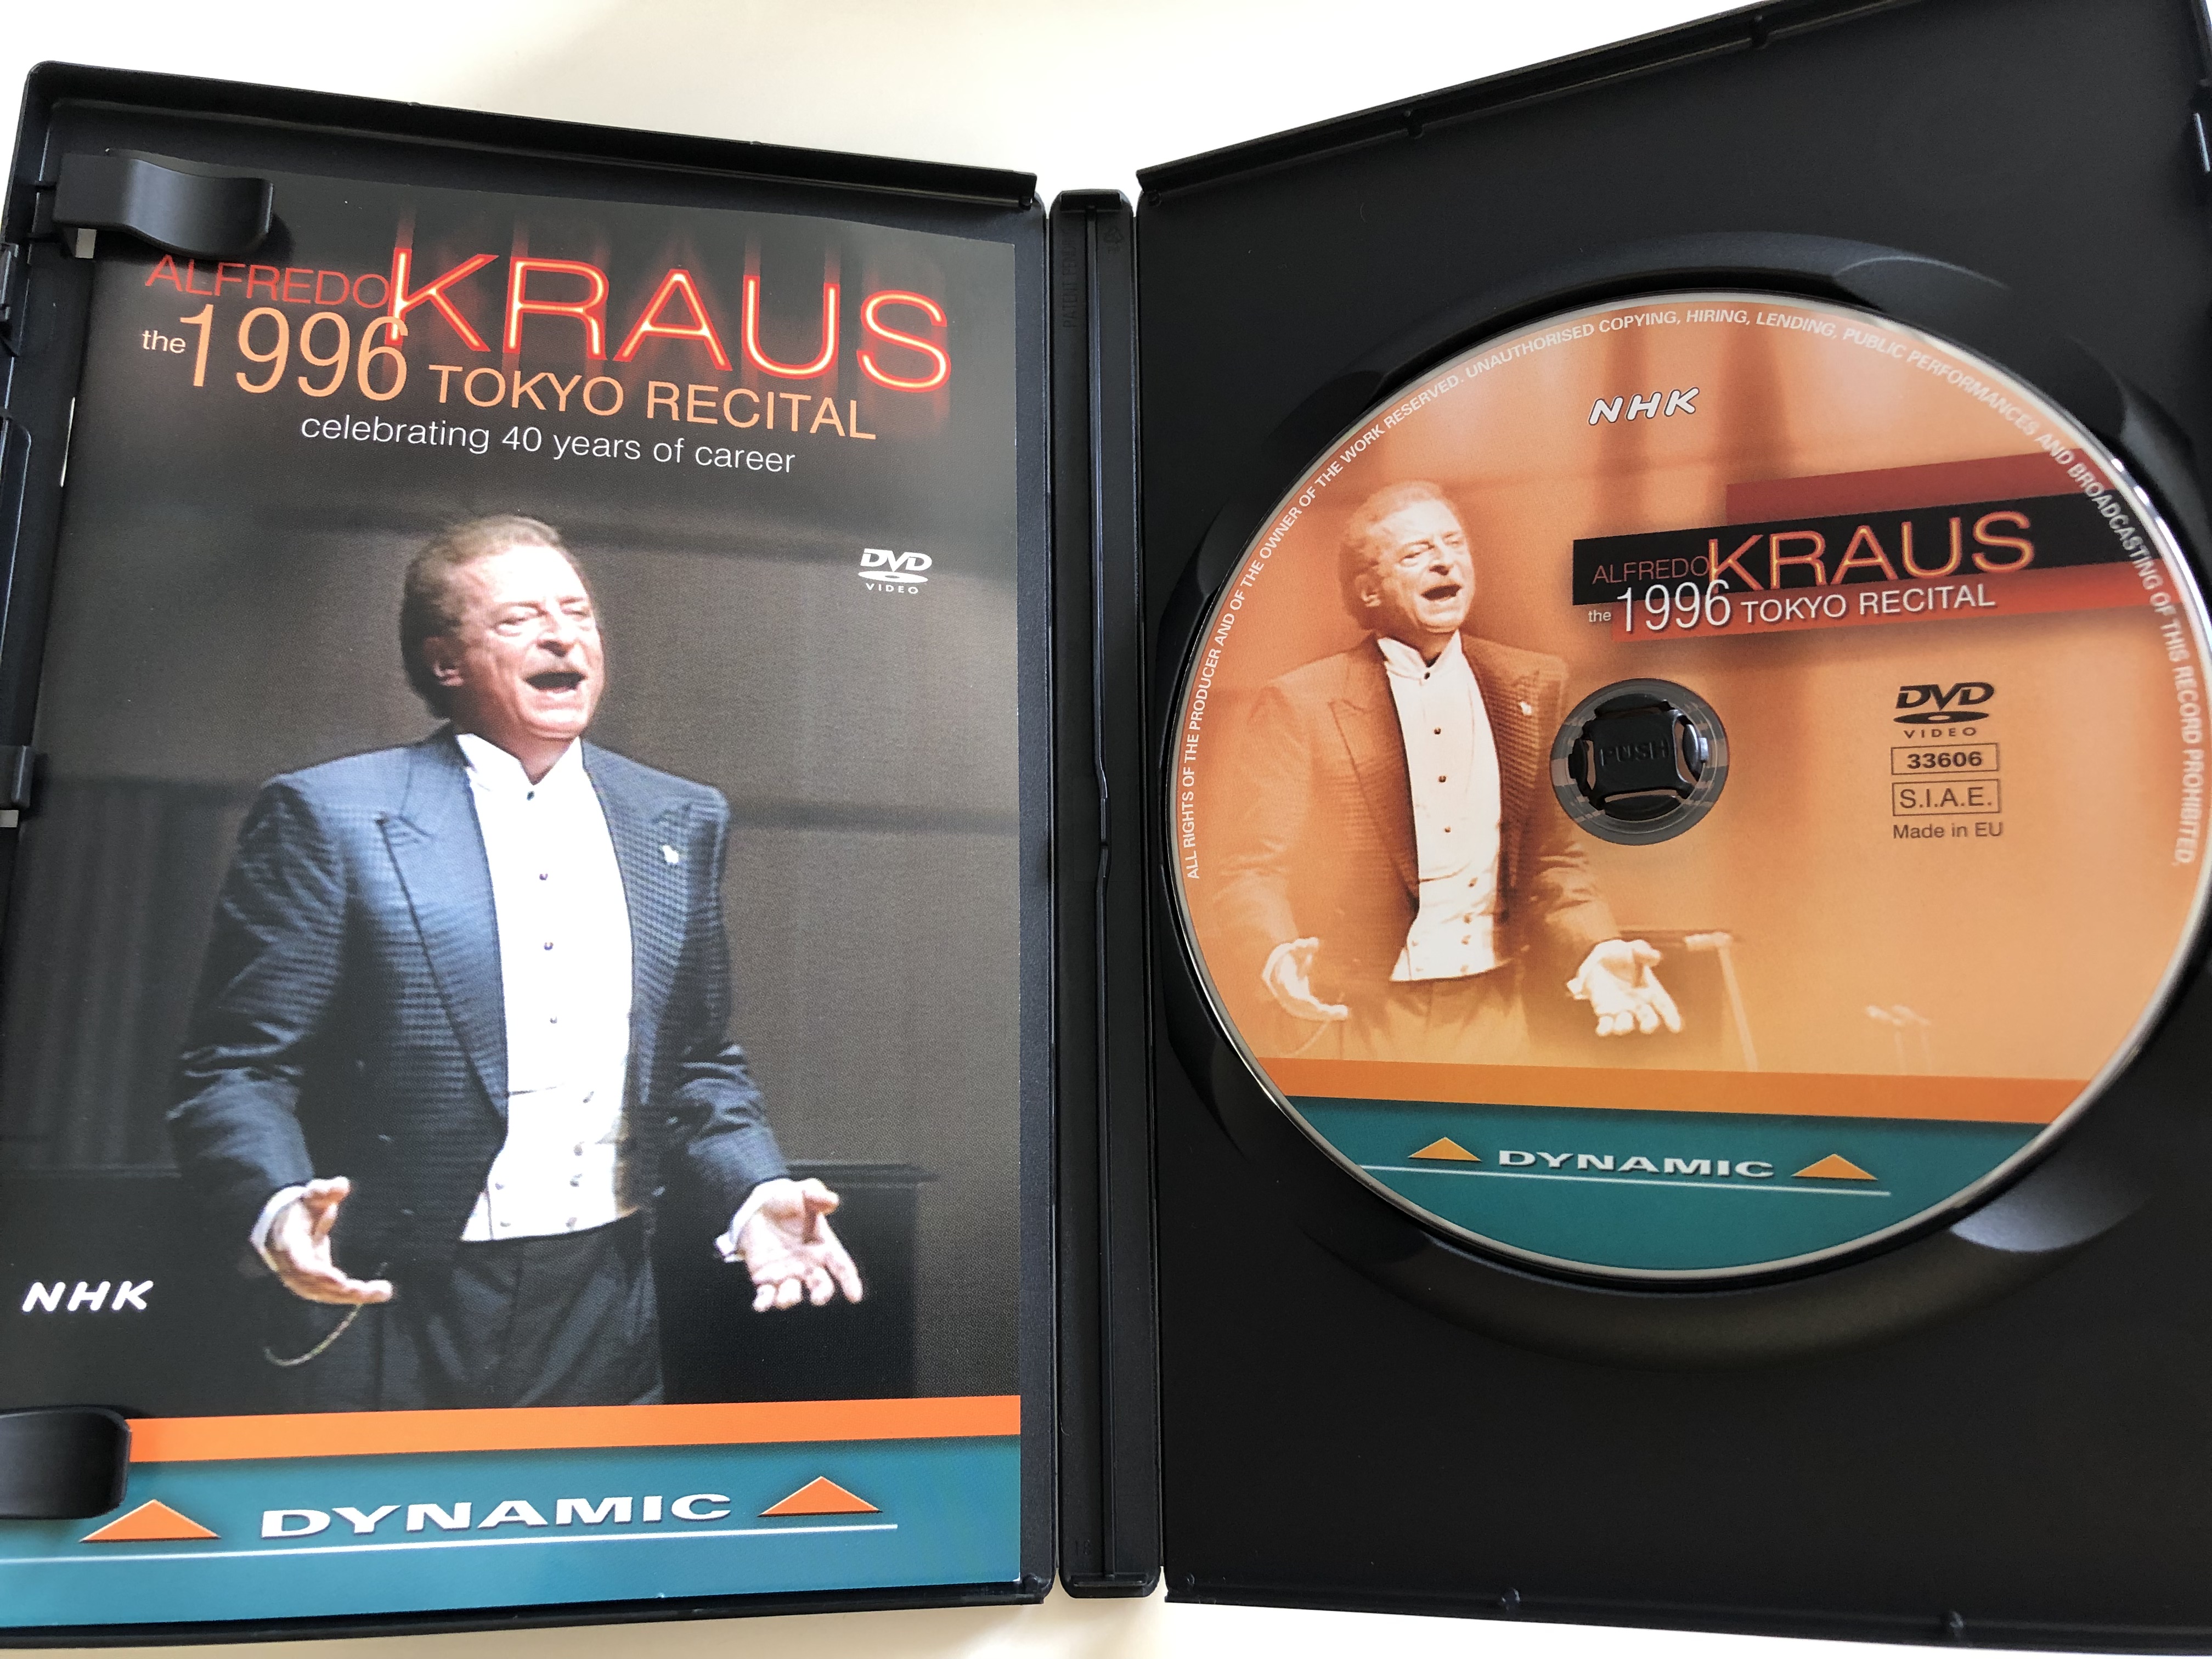 afredo-kraus-the-1996-tokyo-recital-dvd-2010-celebrating-40-years-of-career-recorded-at-tokyo-bunkamura-orchard-hall-1996-alfredo-kraus-tenor-emiko-suga-soprano-edelmiro-arnaltes-piano-asier-polo-cello-2-.jpg